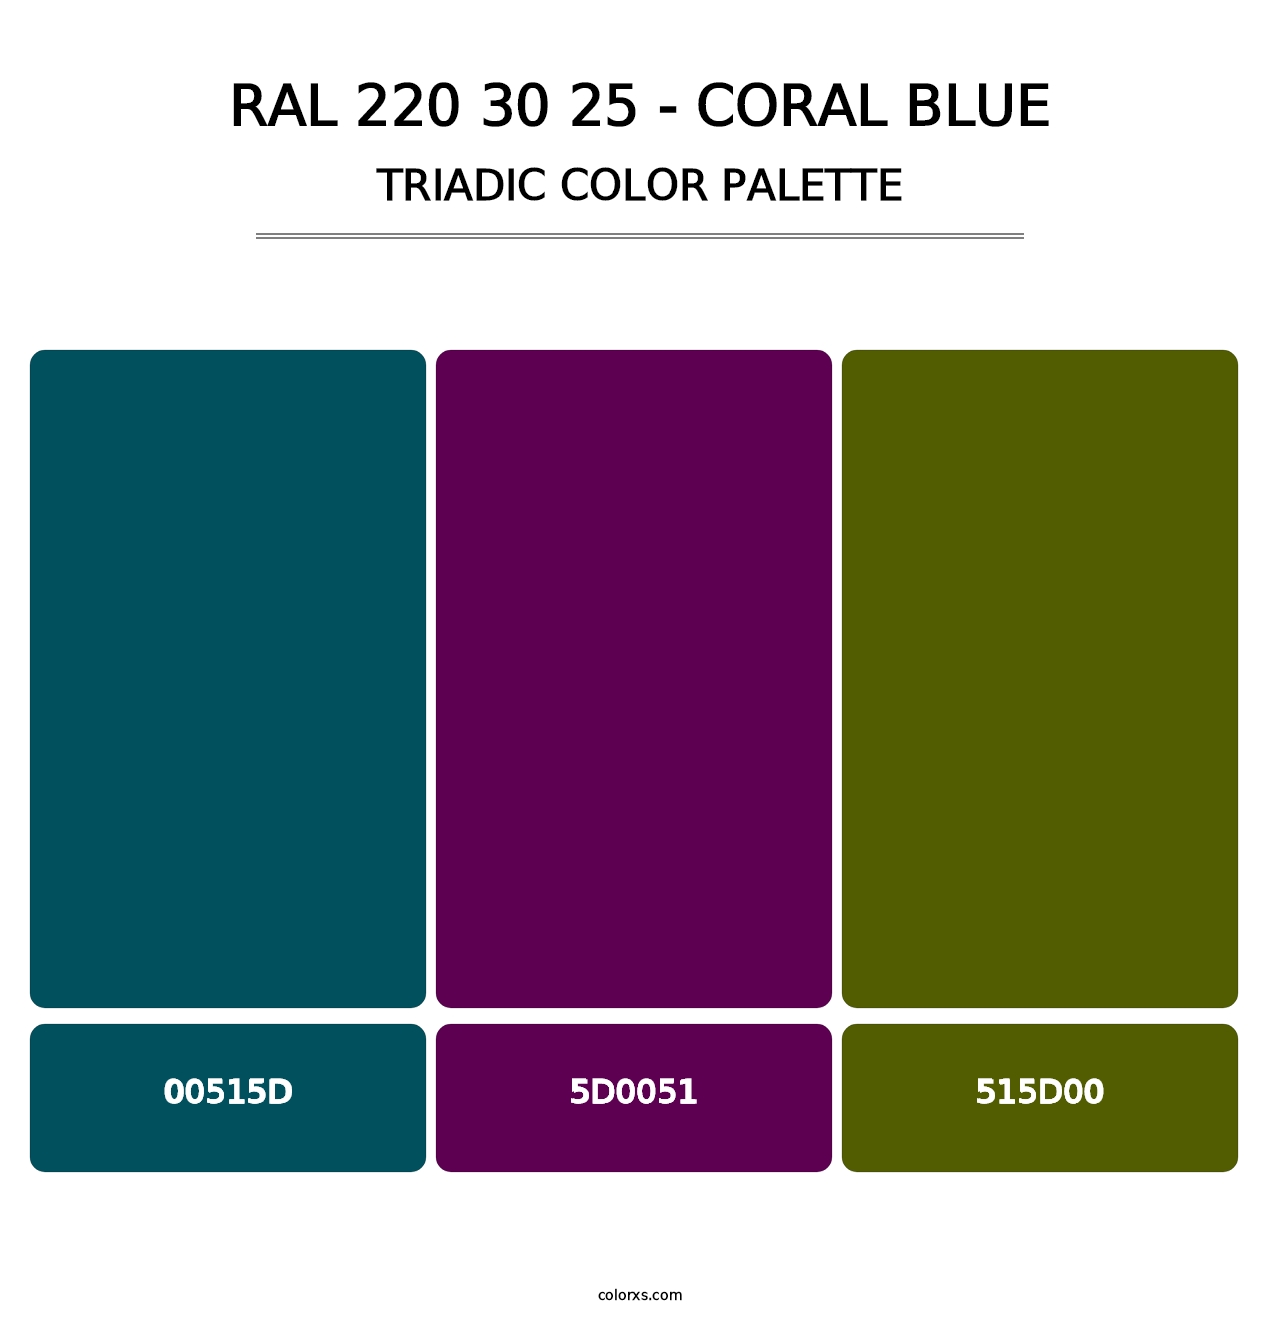 RAL 220 30 25 - Coral Blue - Triadic Color Palette